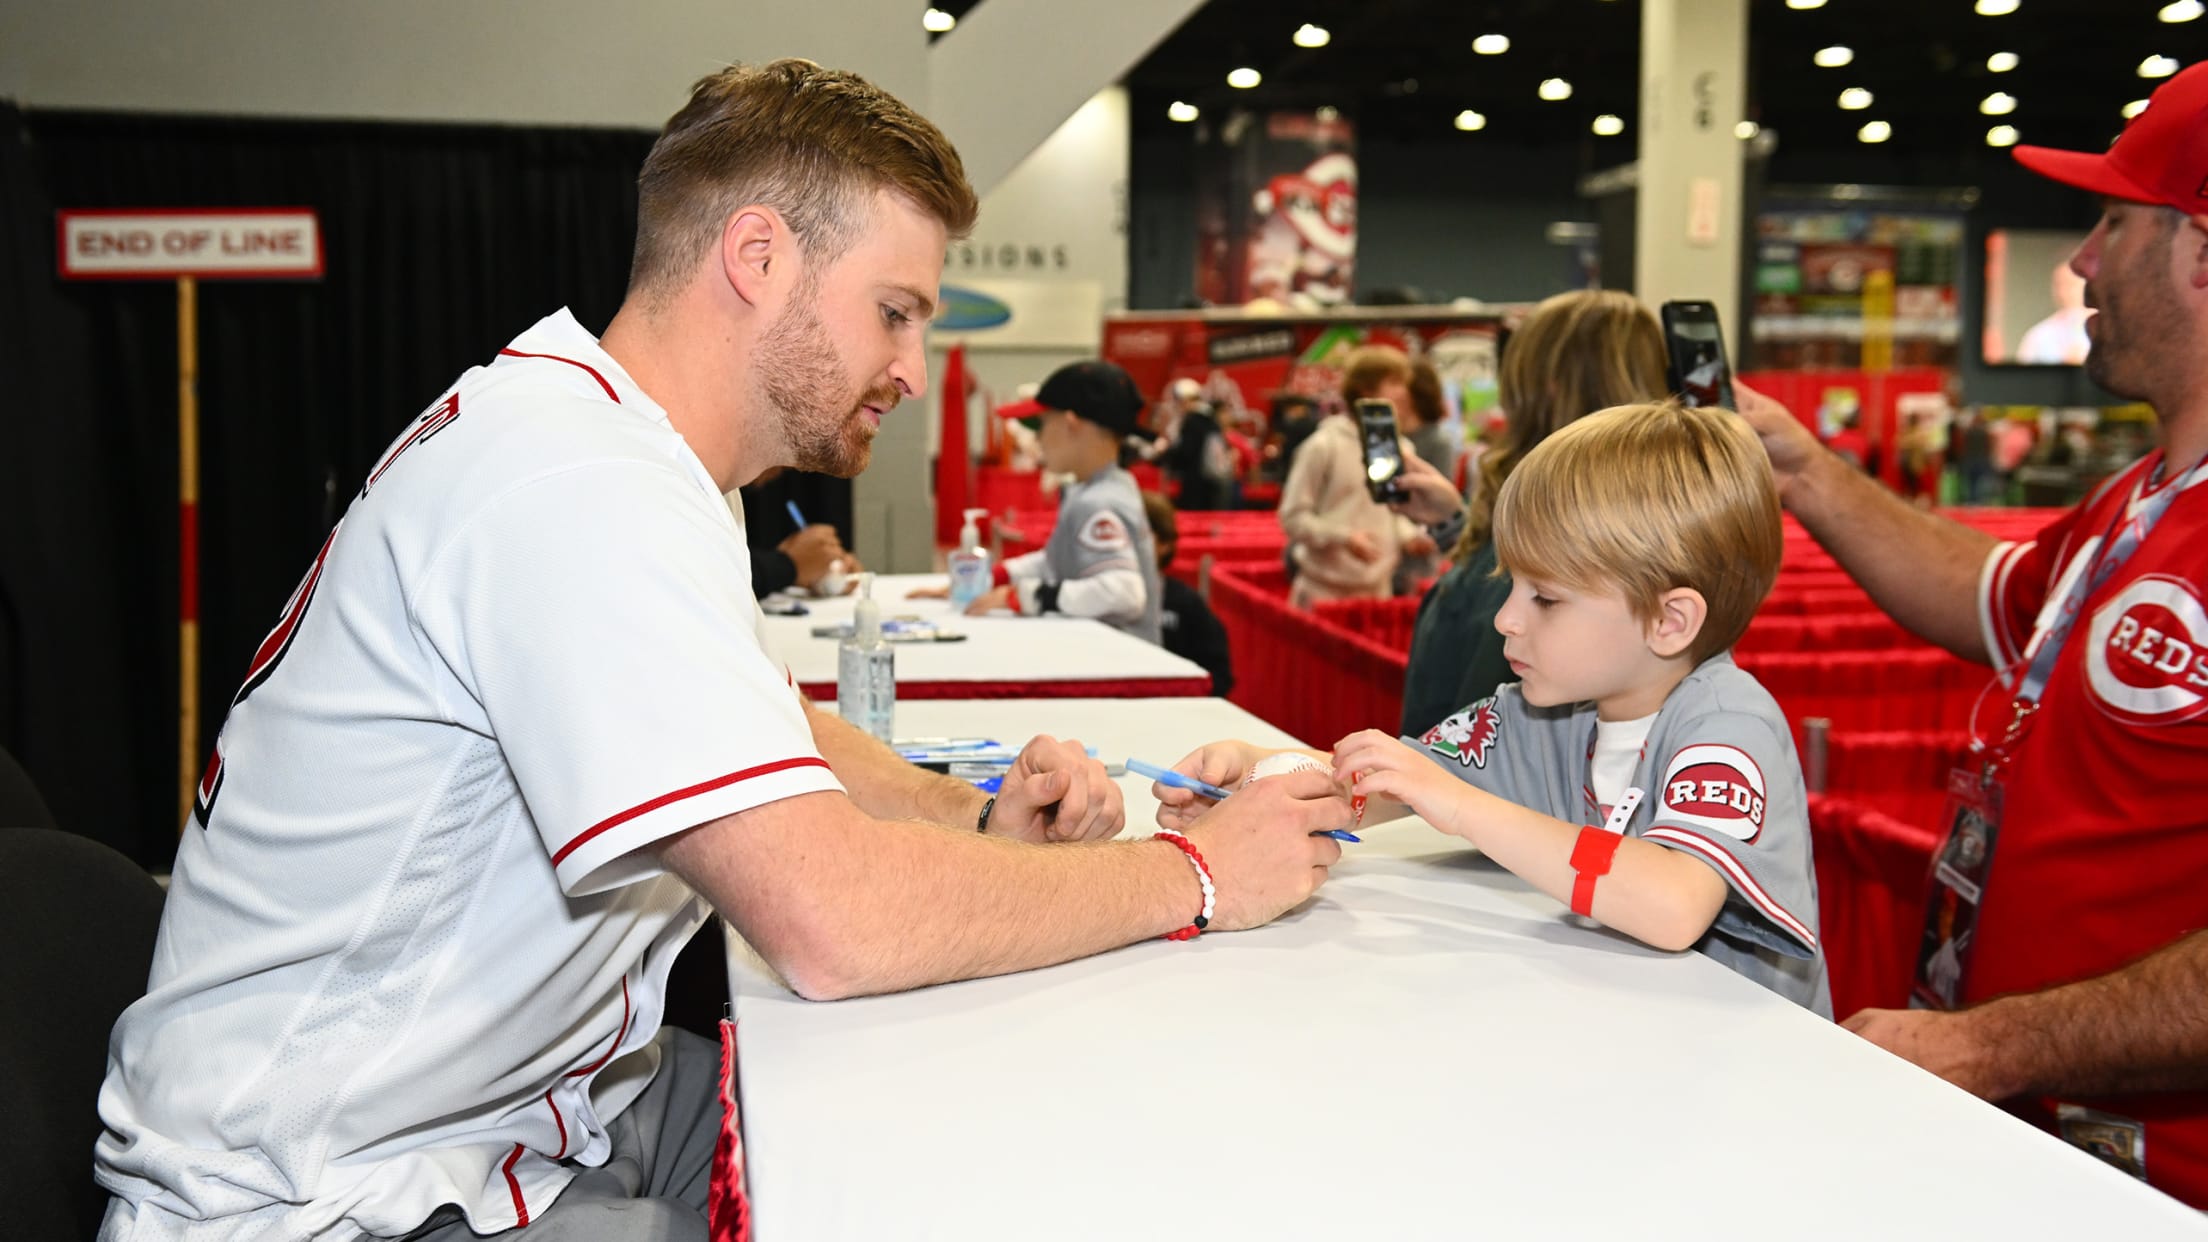 Getting Autographs at Cincinnati Reds Games